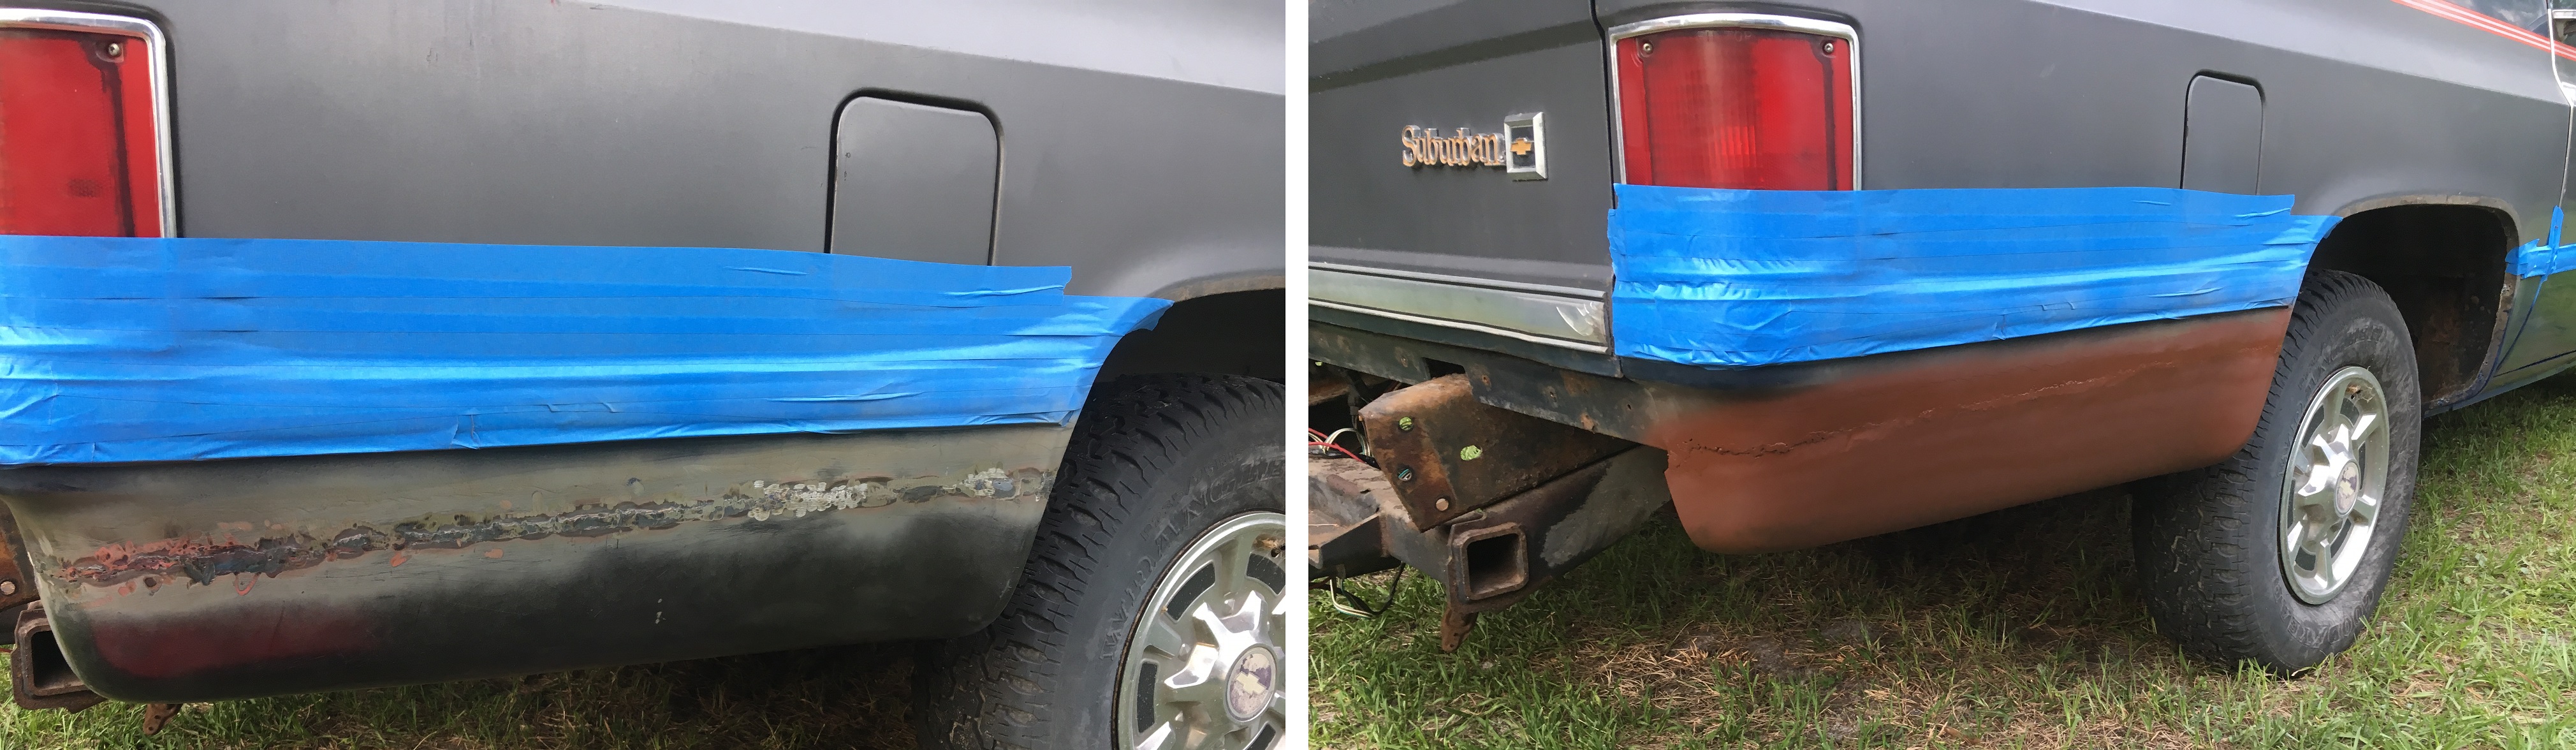 1987 Chevrolet Suburban body work